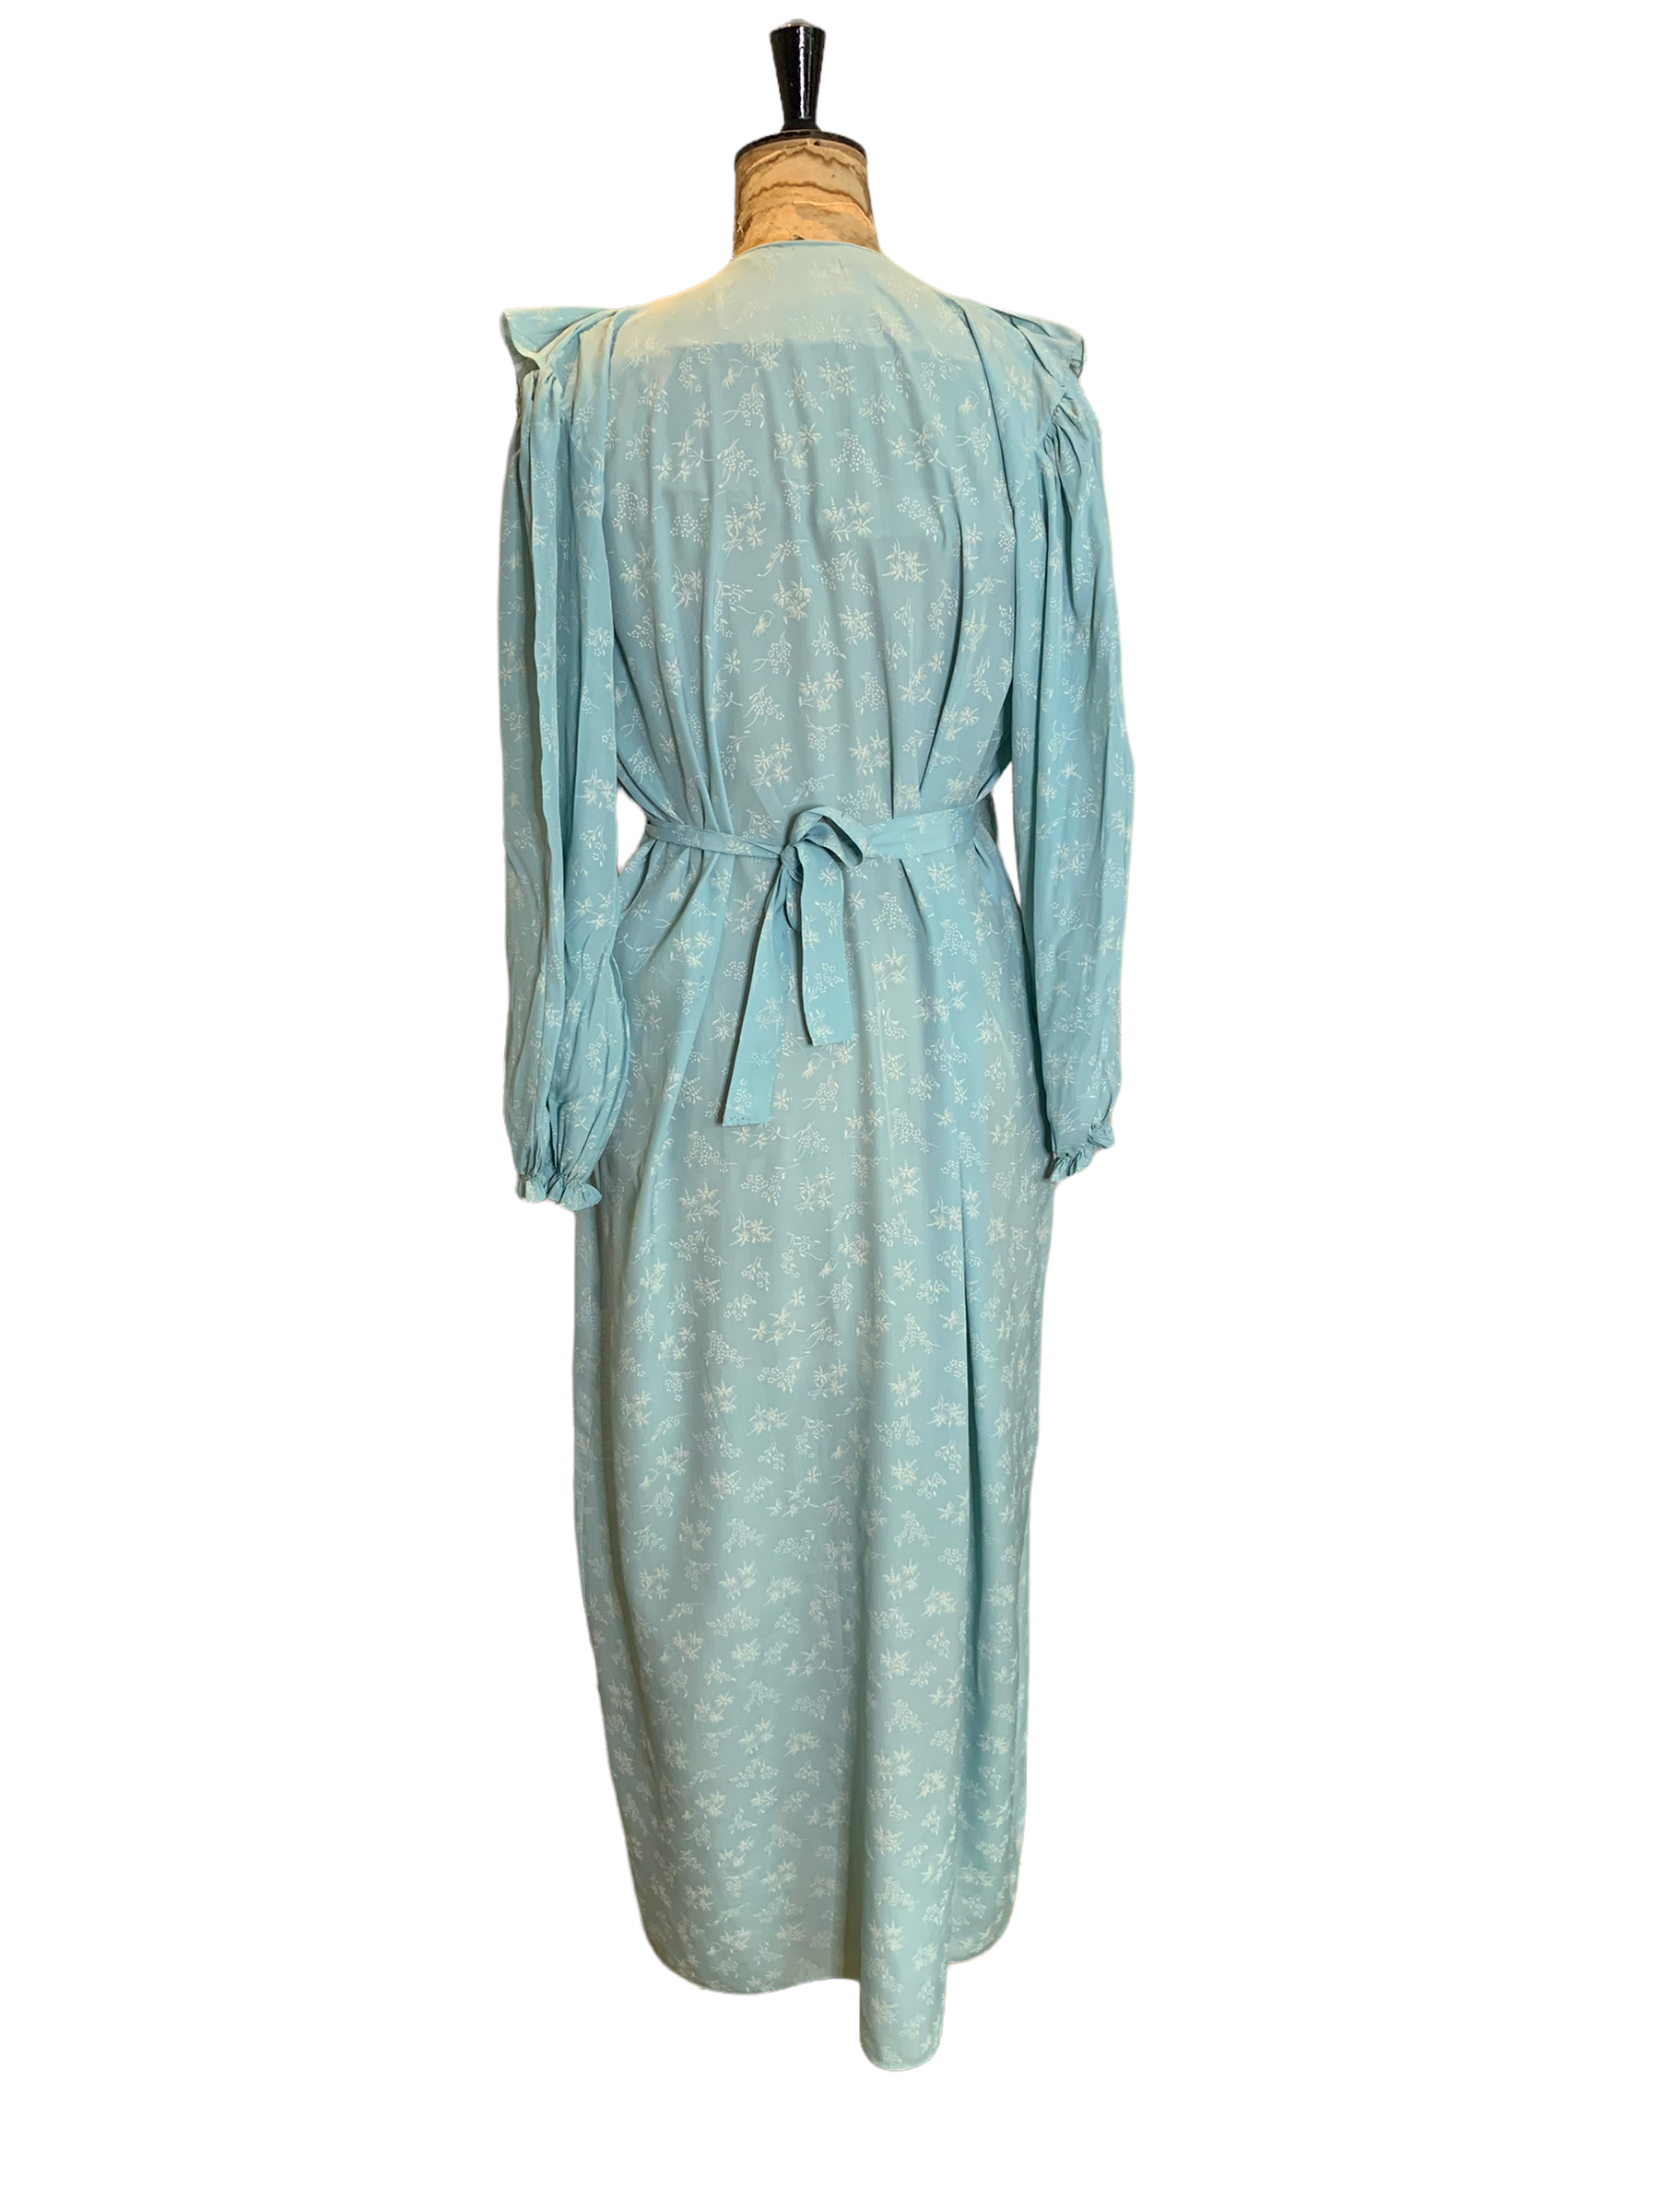 70s Vintage Blue Silk Maxi Dress UK Size 12 - 16